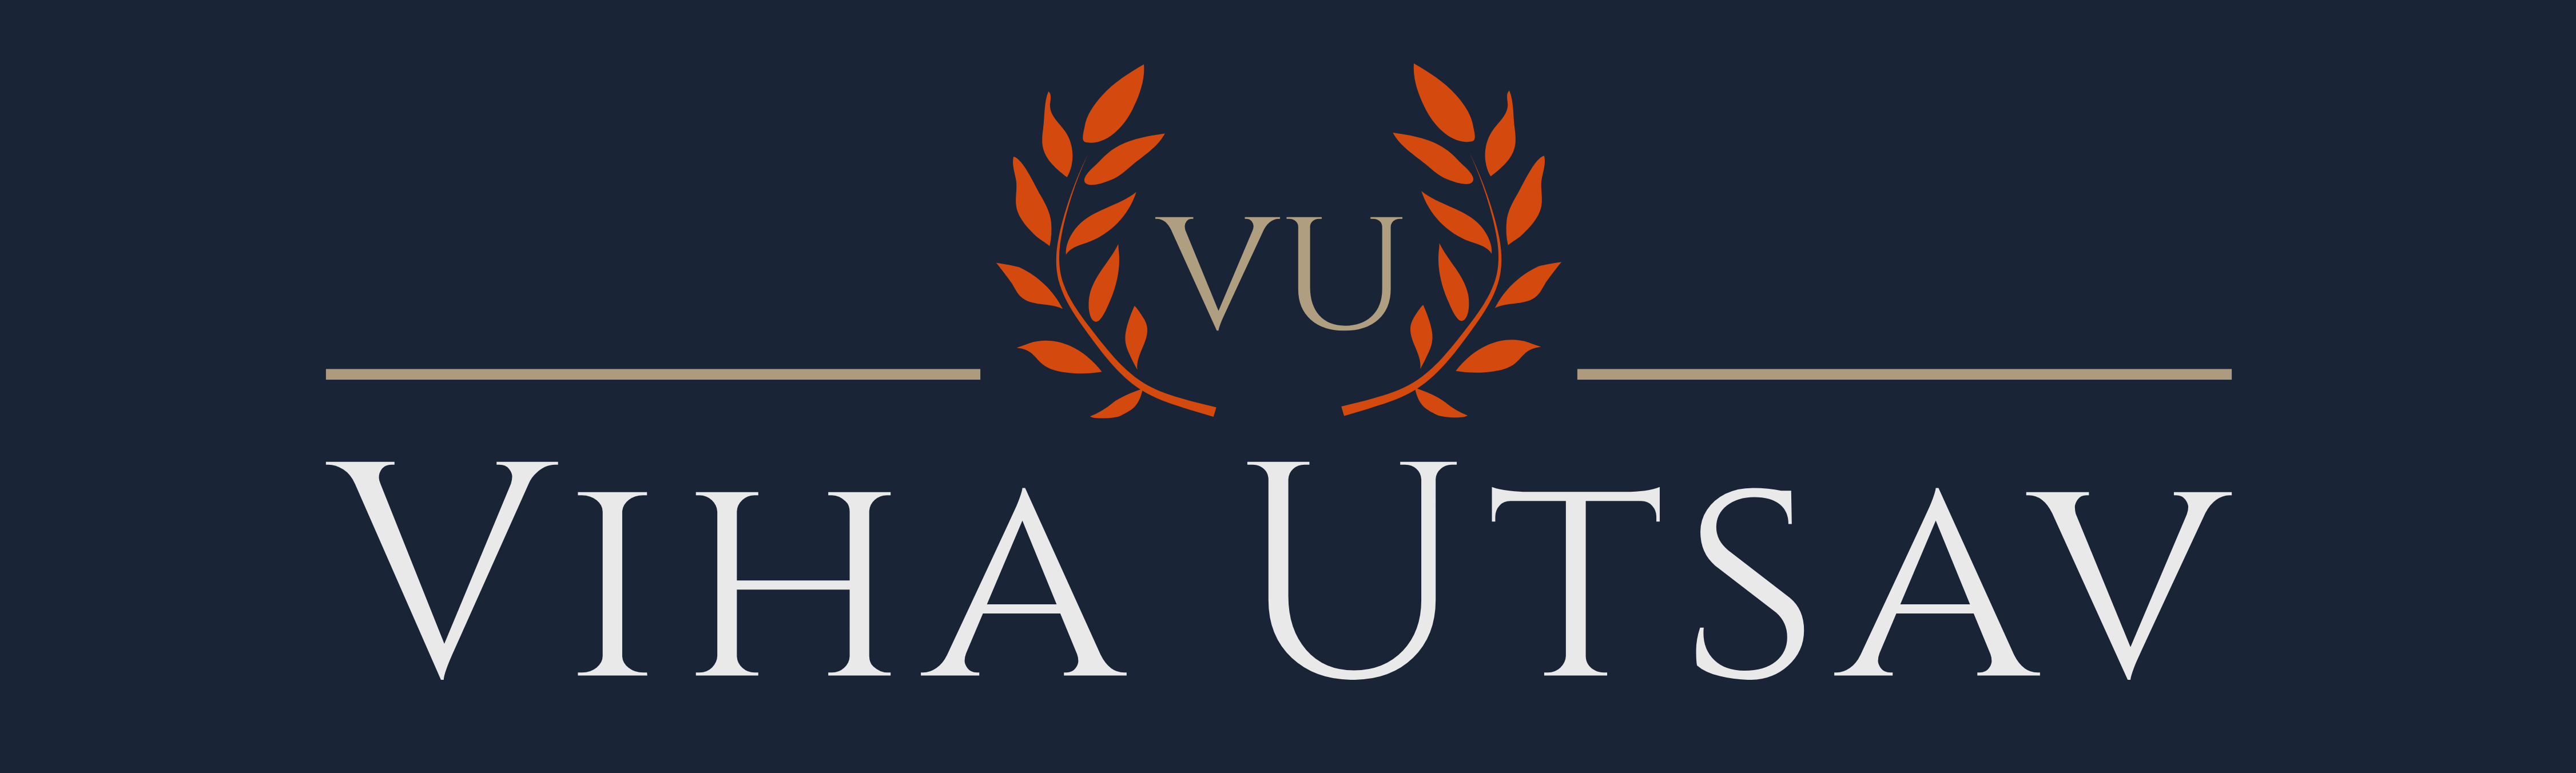 VihaUtsav_Logo2